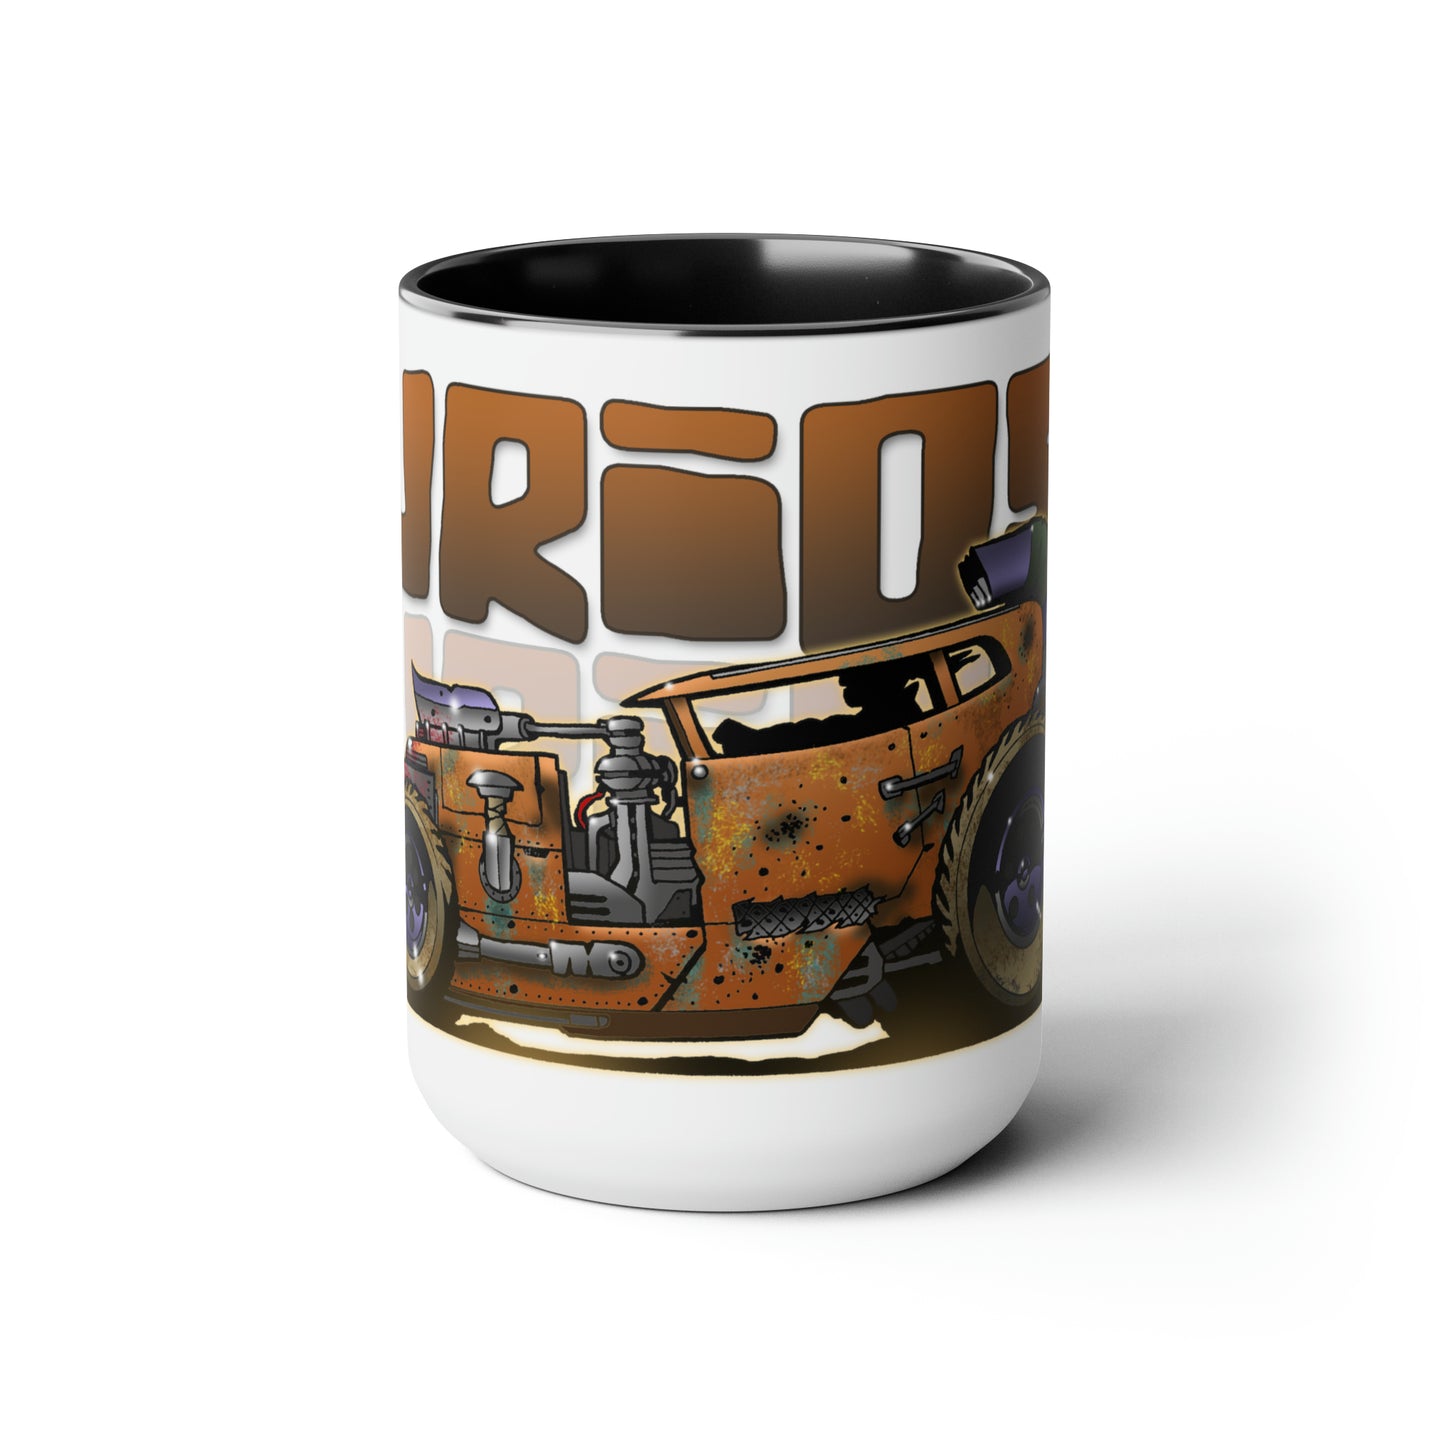 FURIOSA Mad Max Movie Car Hot Rod Coffee Mug 15oz